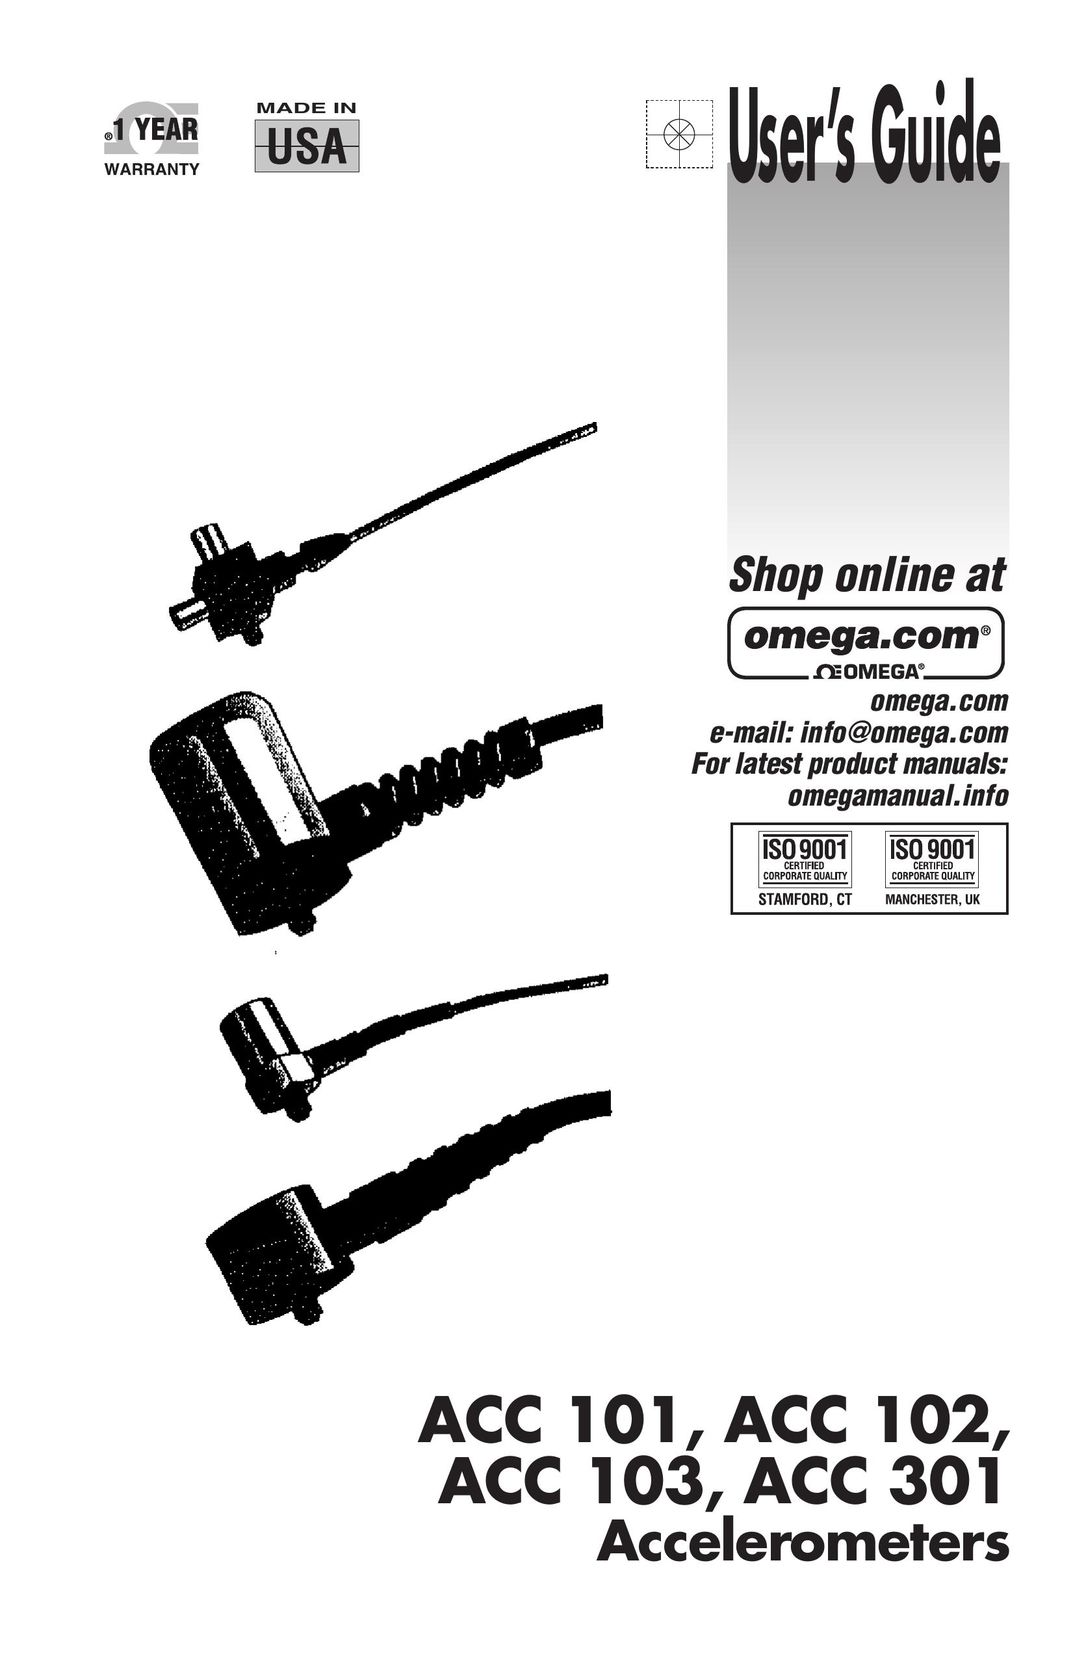 Omega acc 101 Model Vehicle User Manual